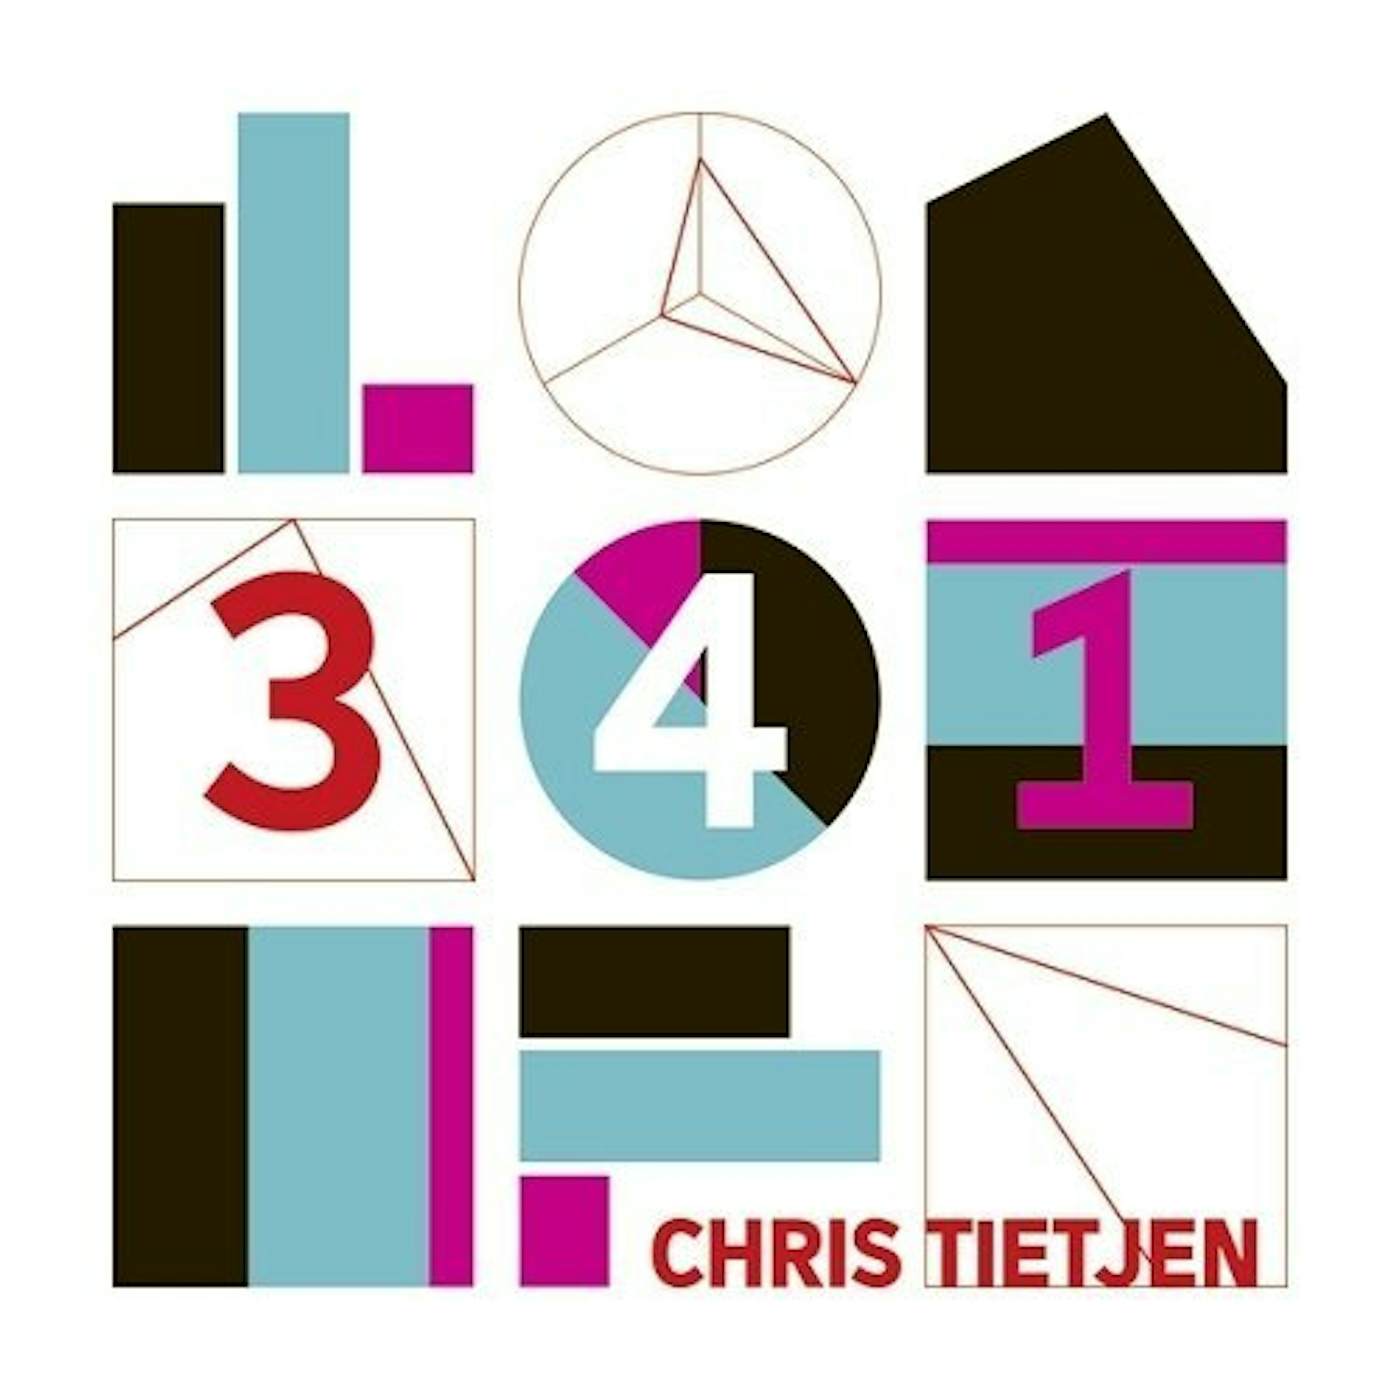 Chris Tietjen 341 Vinyl Record